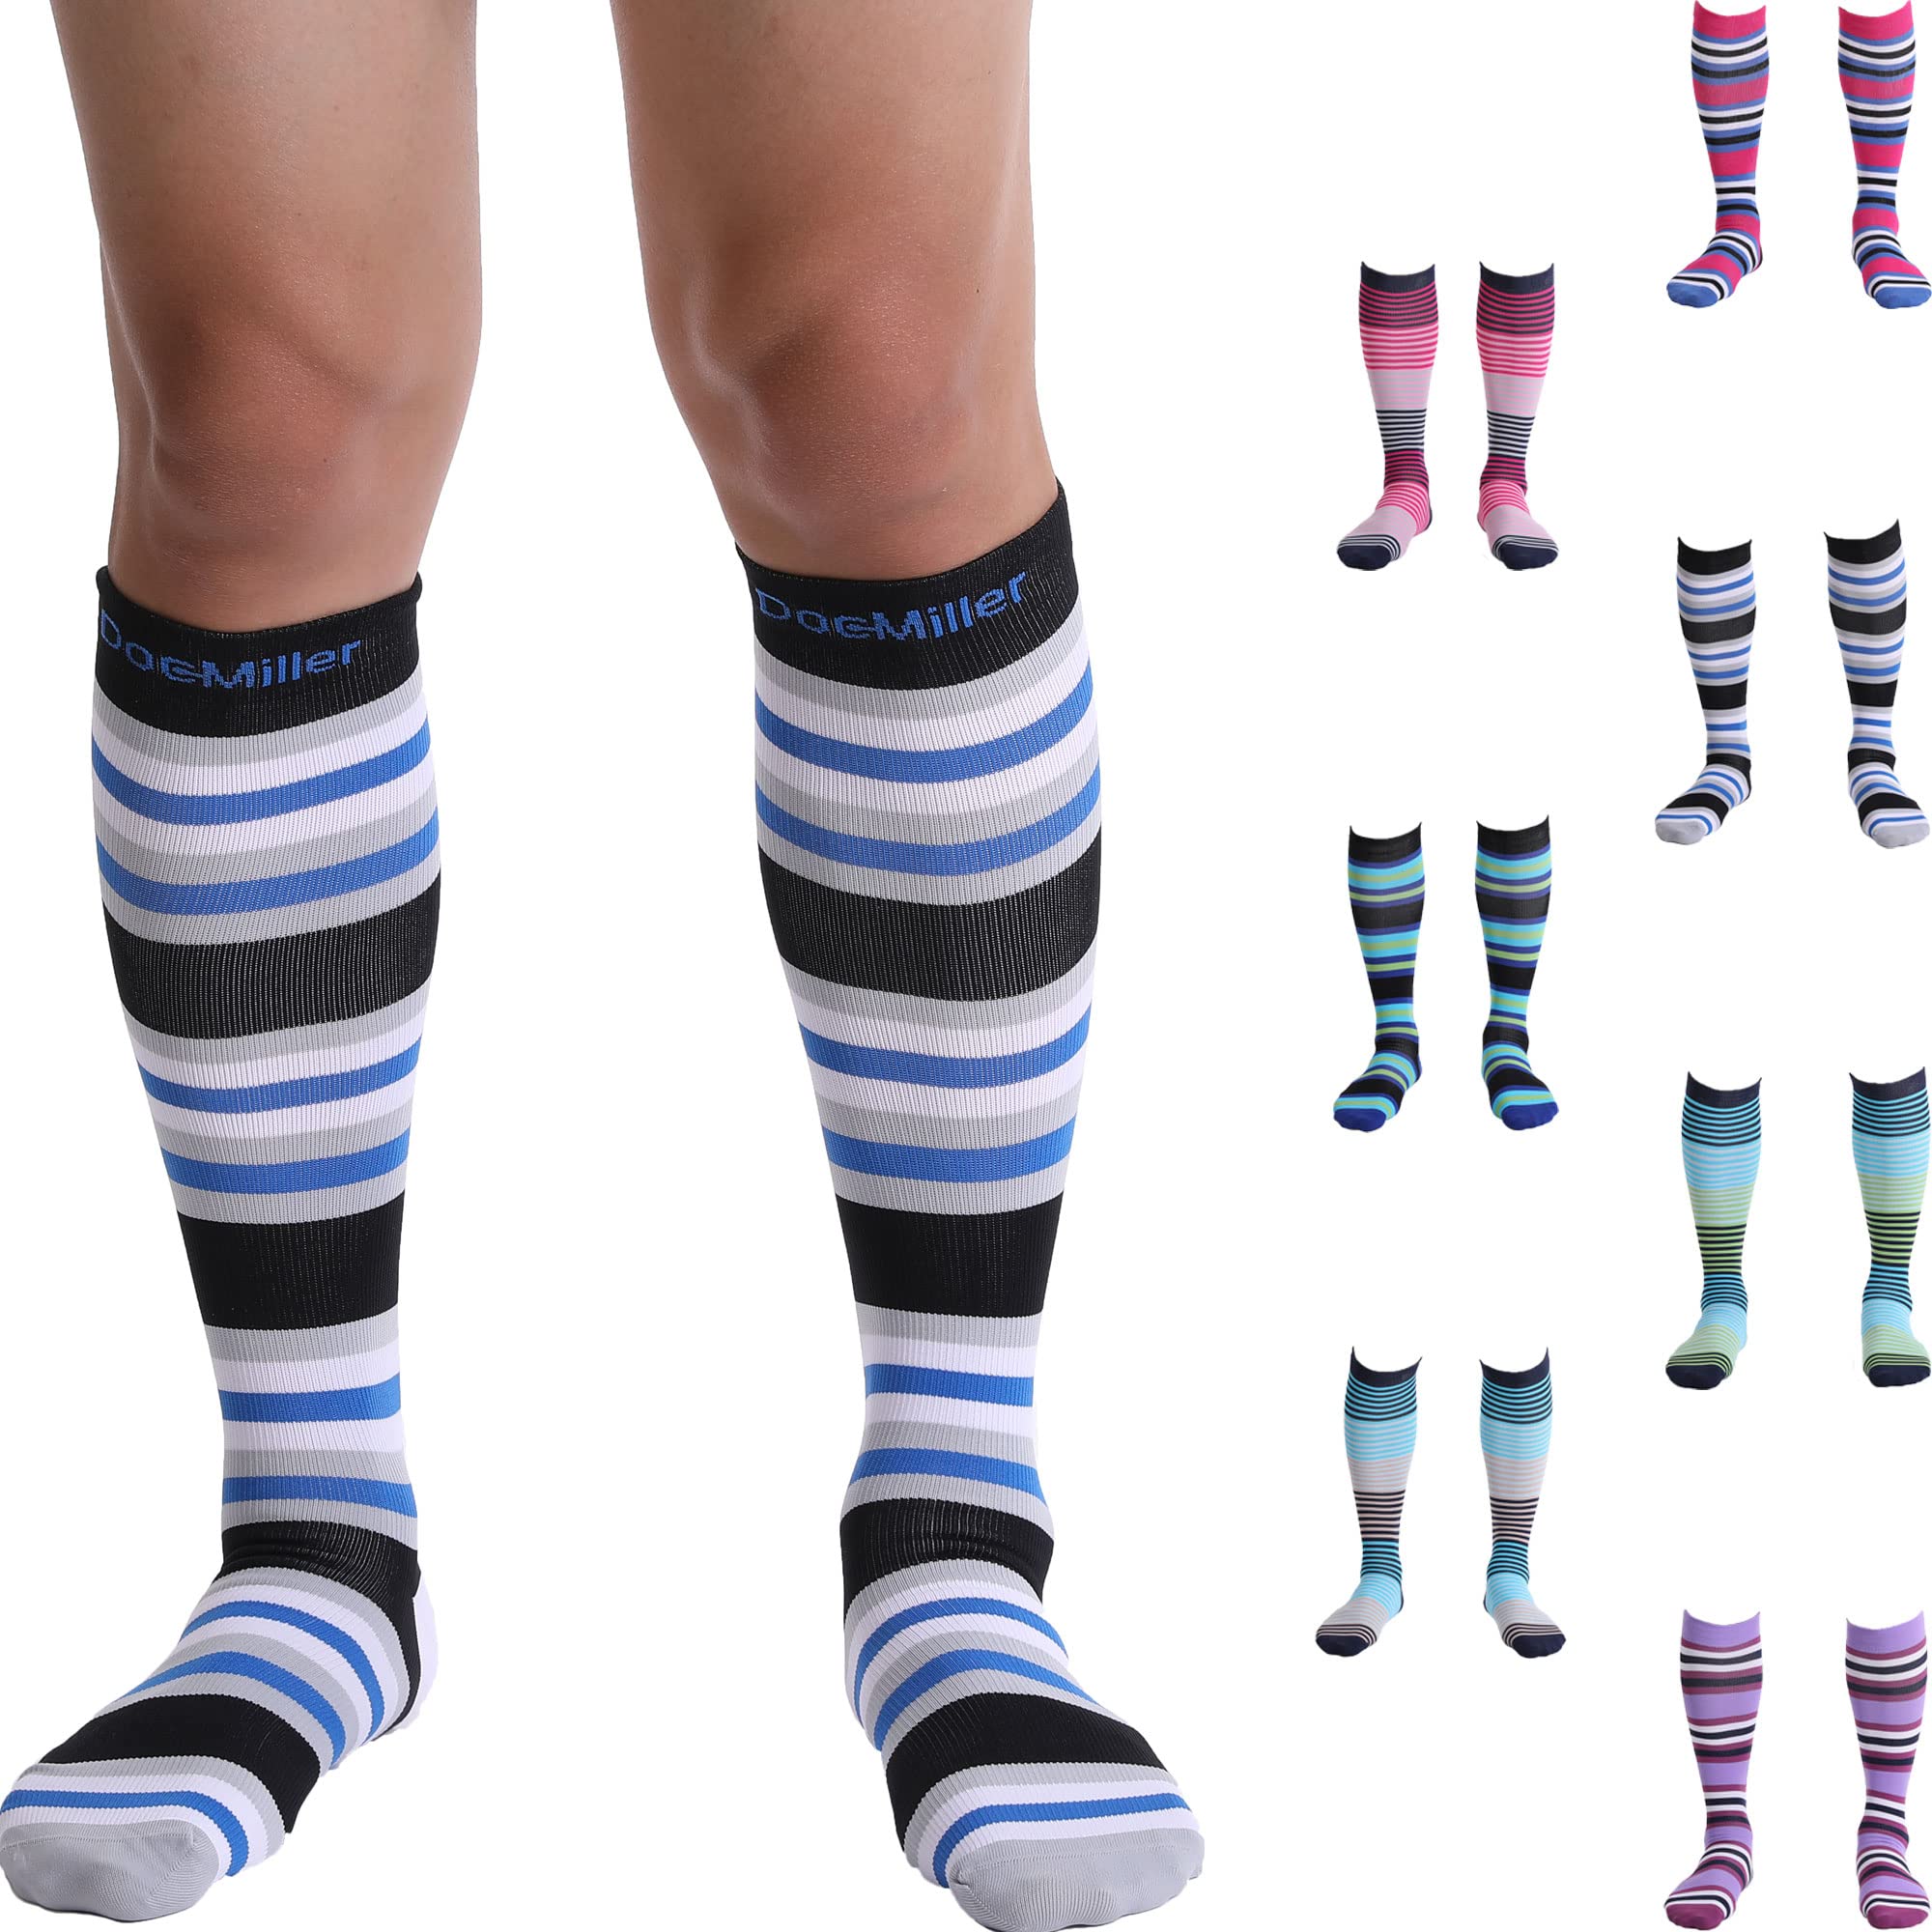 Doc Miller Compression Socks for Women and Men 15-20mmHg, Knee